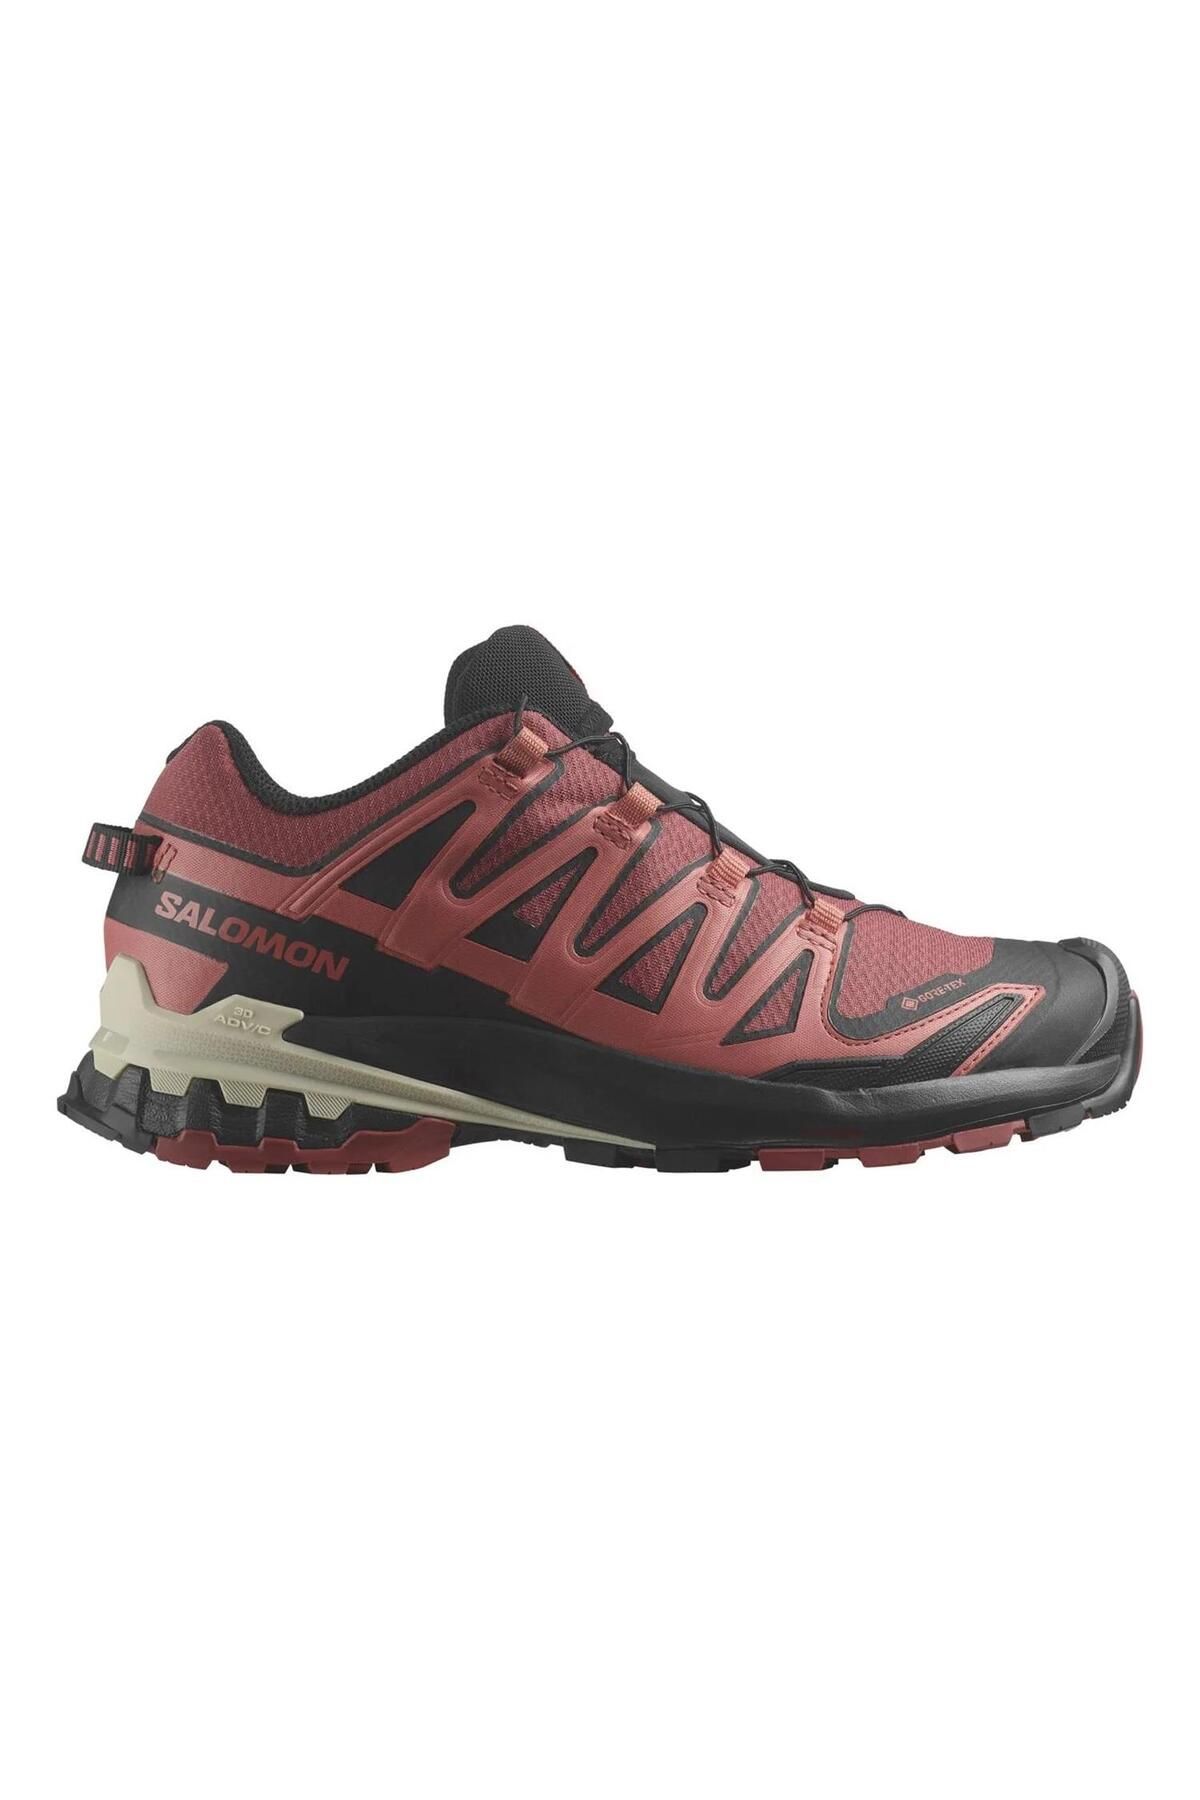 Salomon Xa Pro 3d V9 Gore-tex Kadın Patika Koşu Ayakkabısı-l47270900cbf